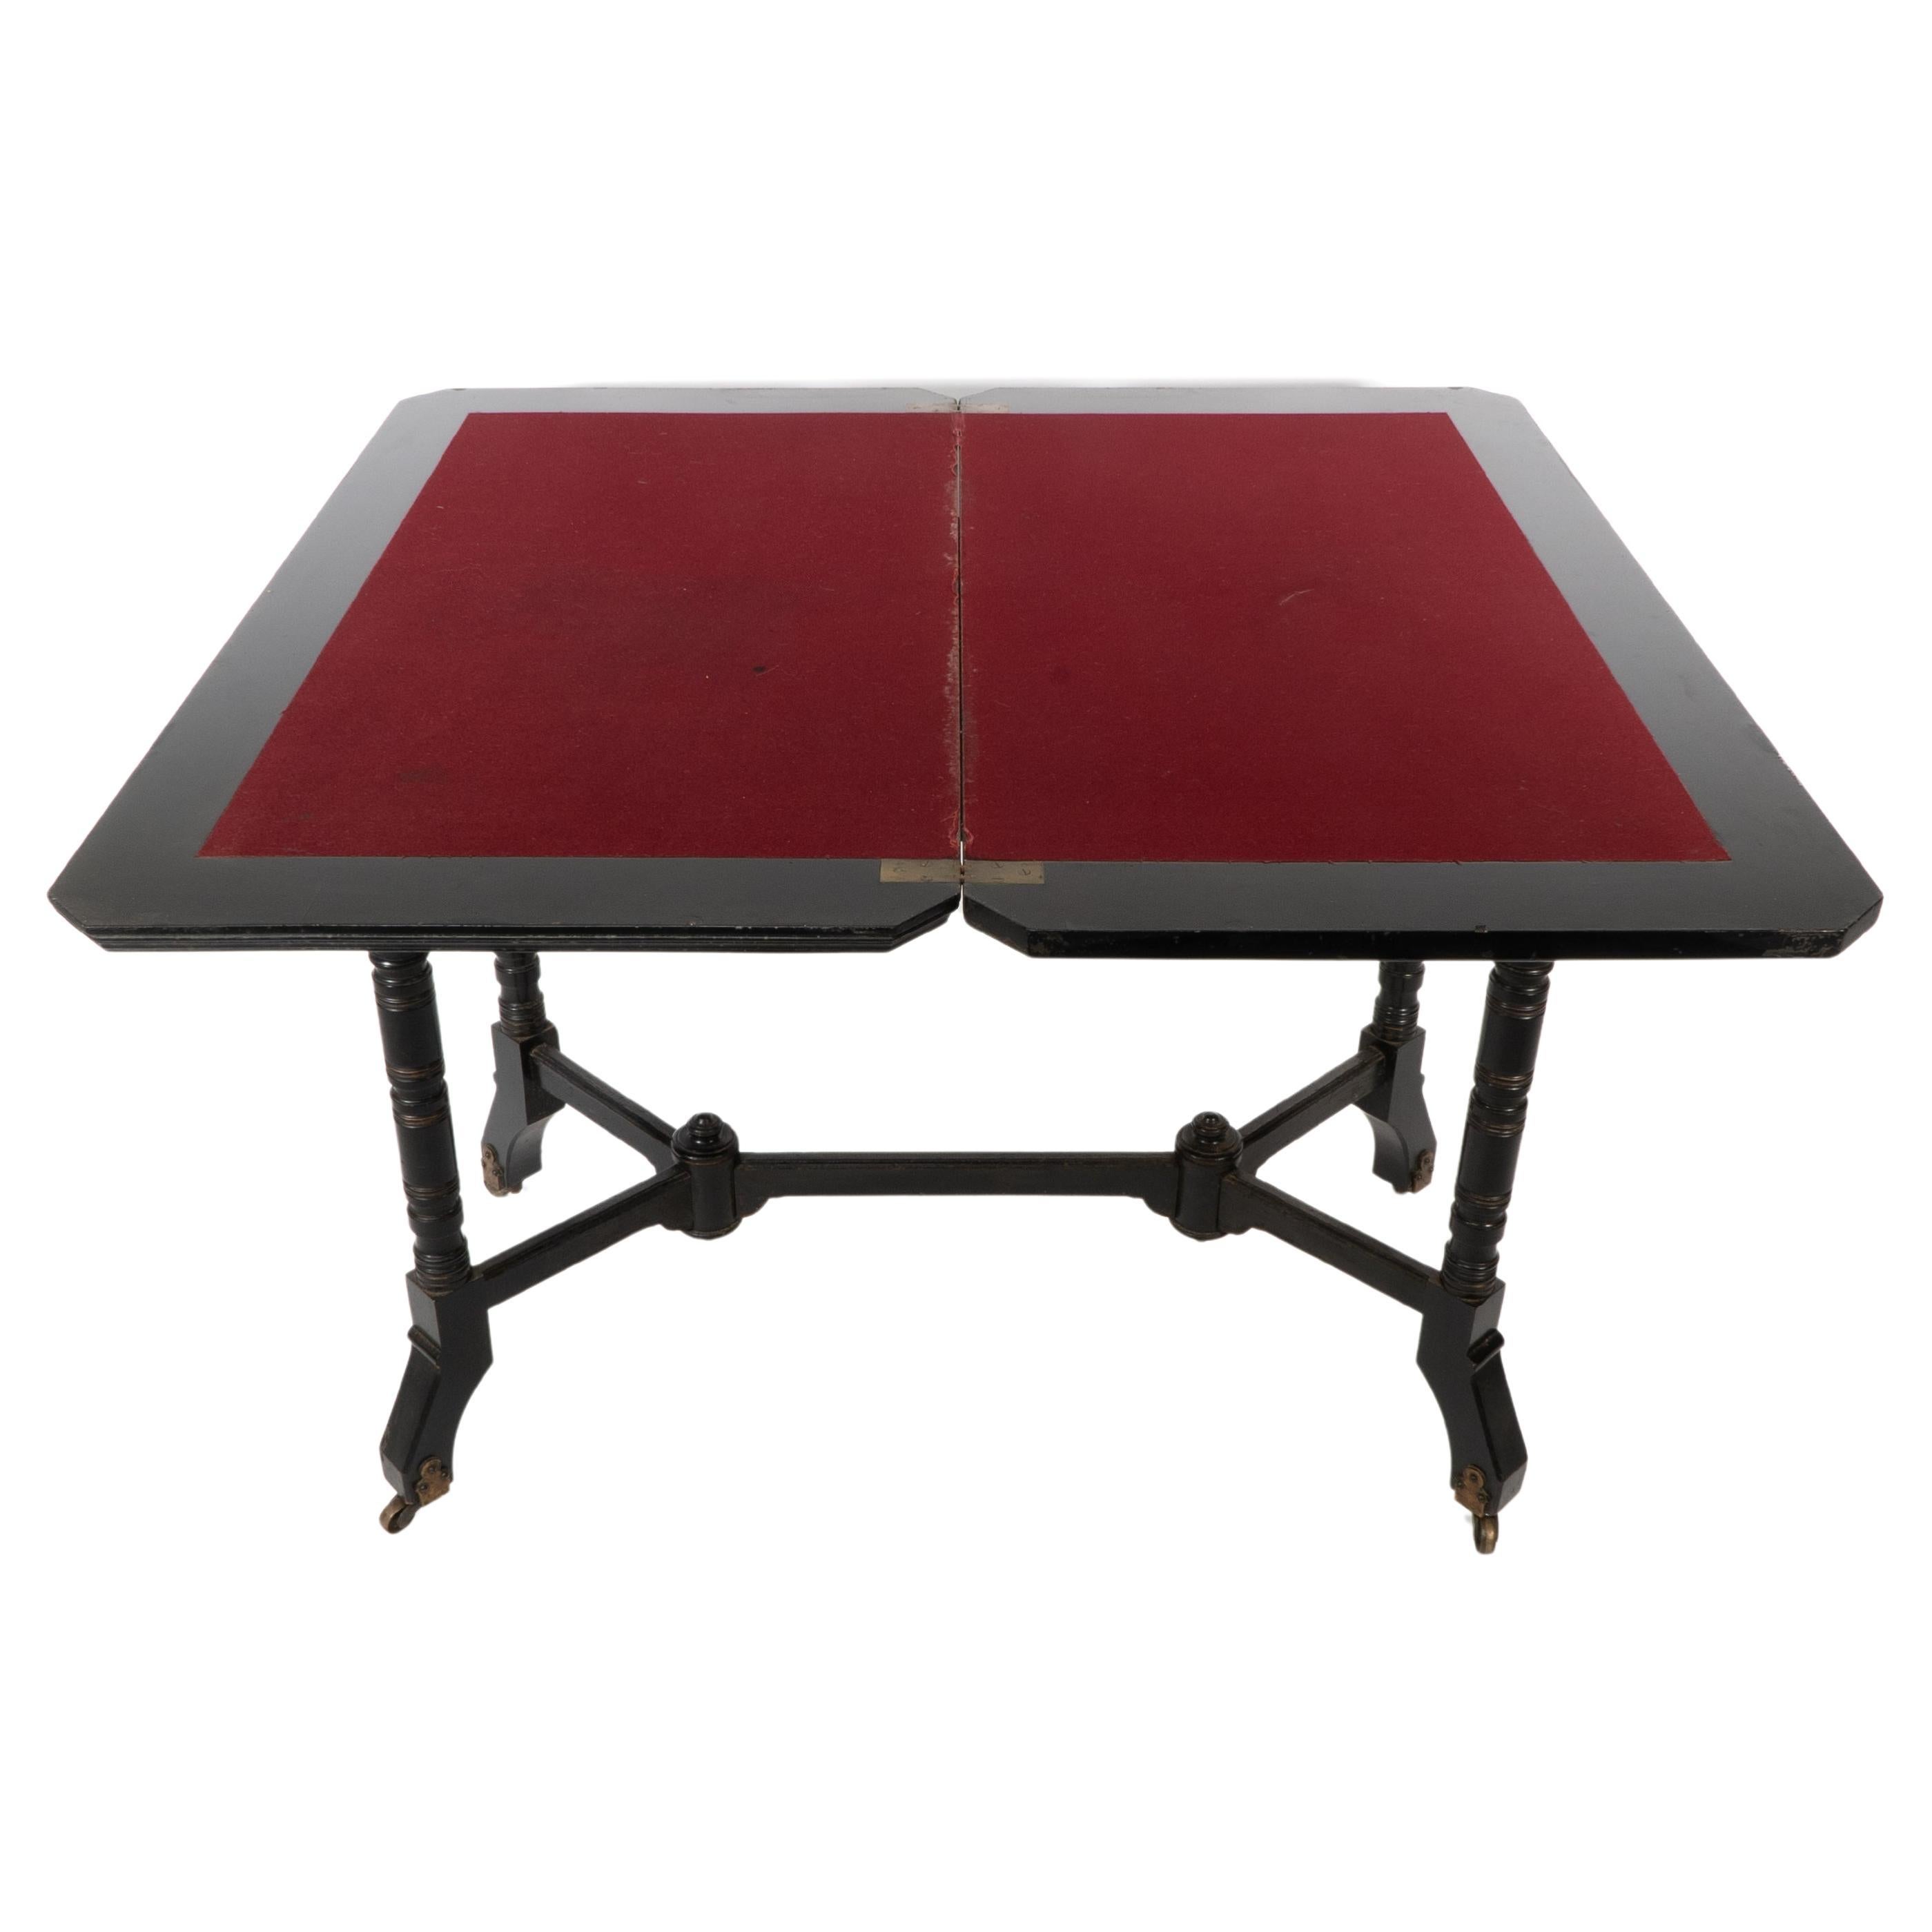 Bevan. Marsh Jones & Cribb. An Aesthetic Movement walnut ebonized card table For Sale